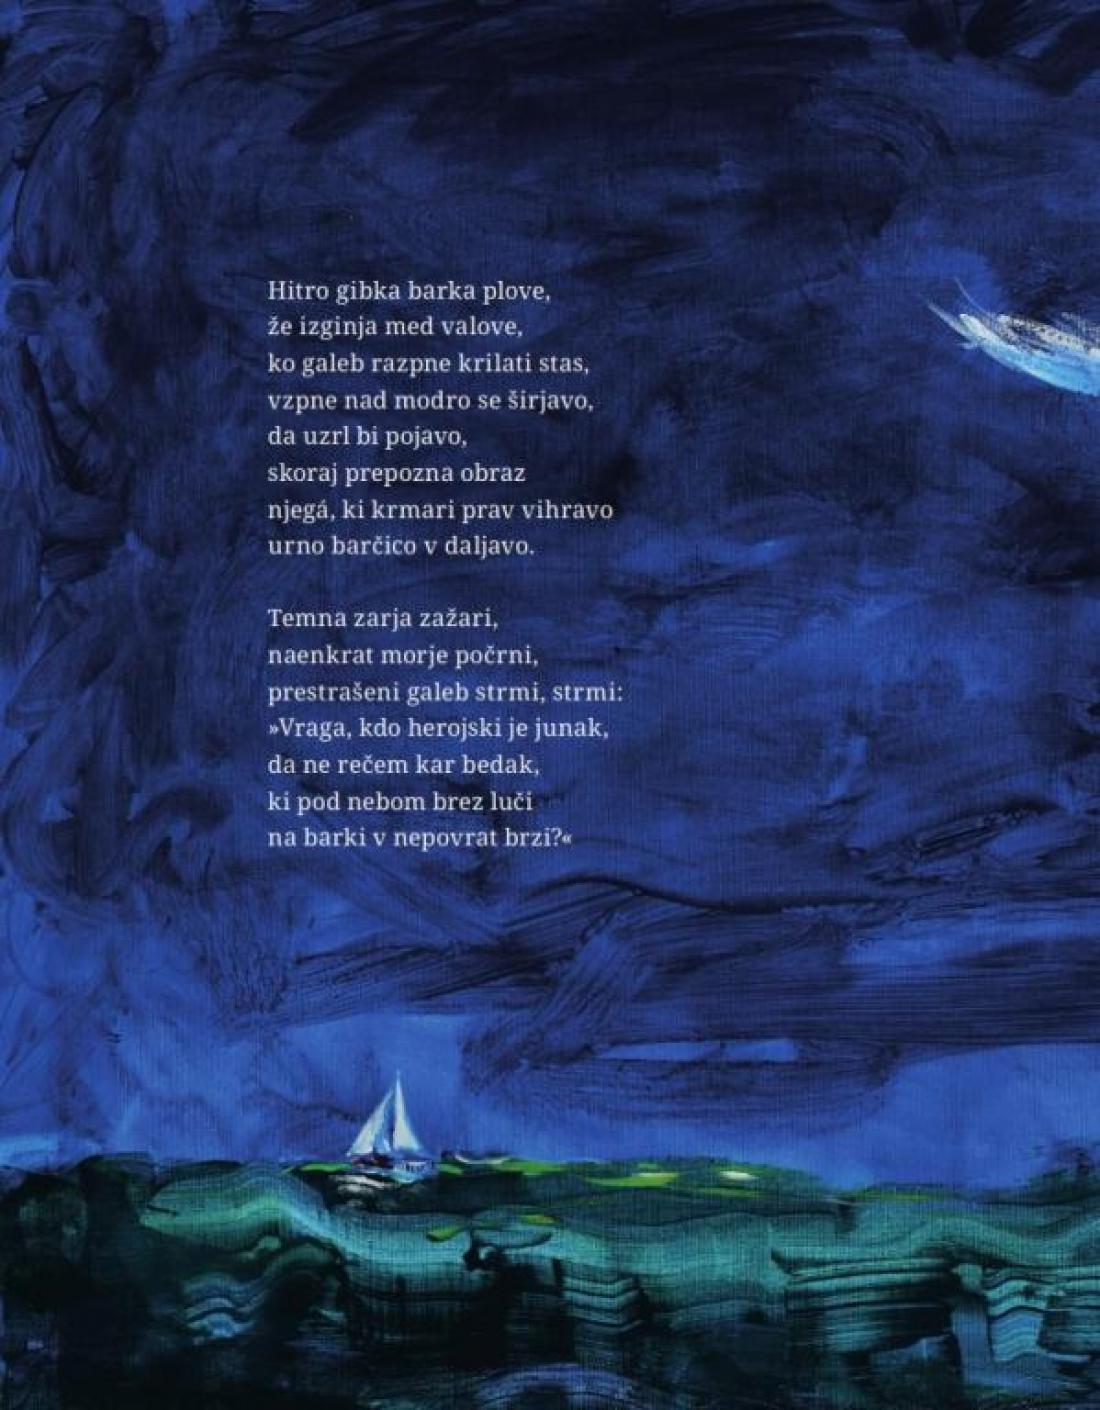 Rumi in Kapitan_Saša Pavček_Založba Miš (4).jpg